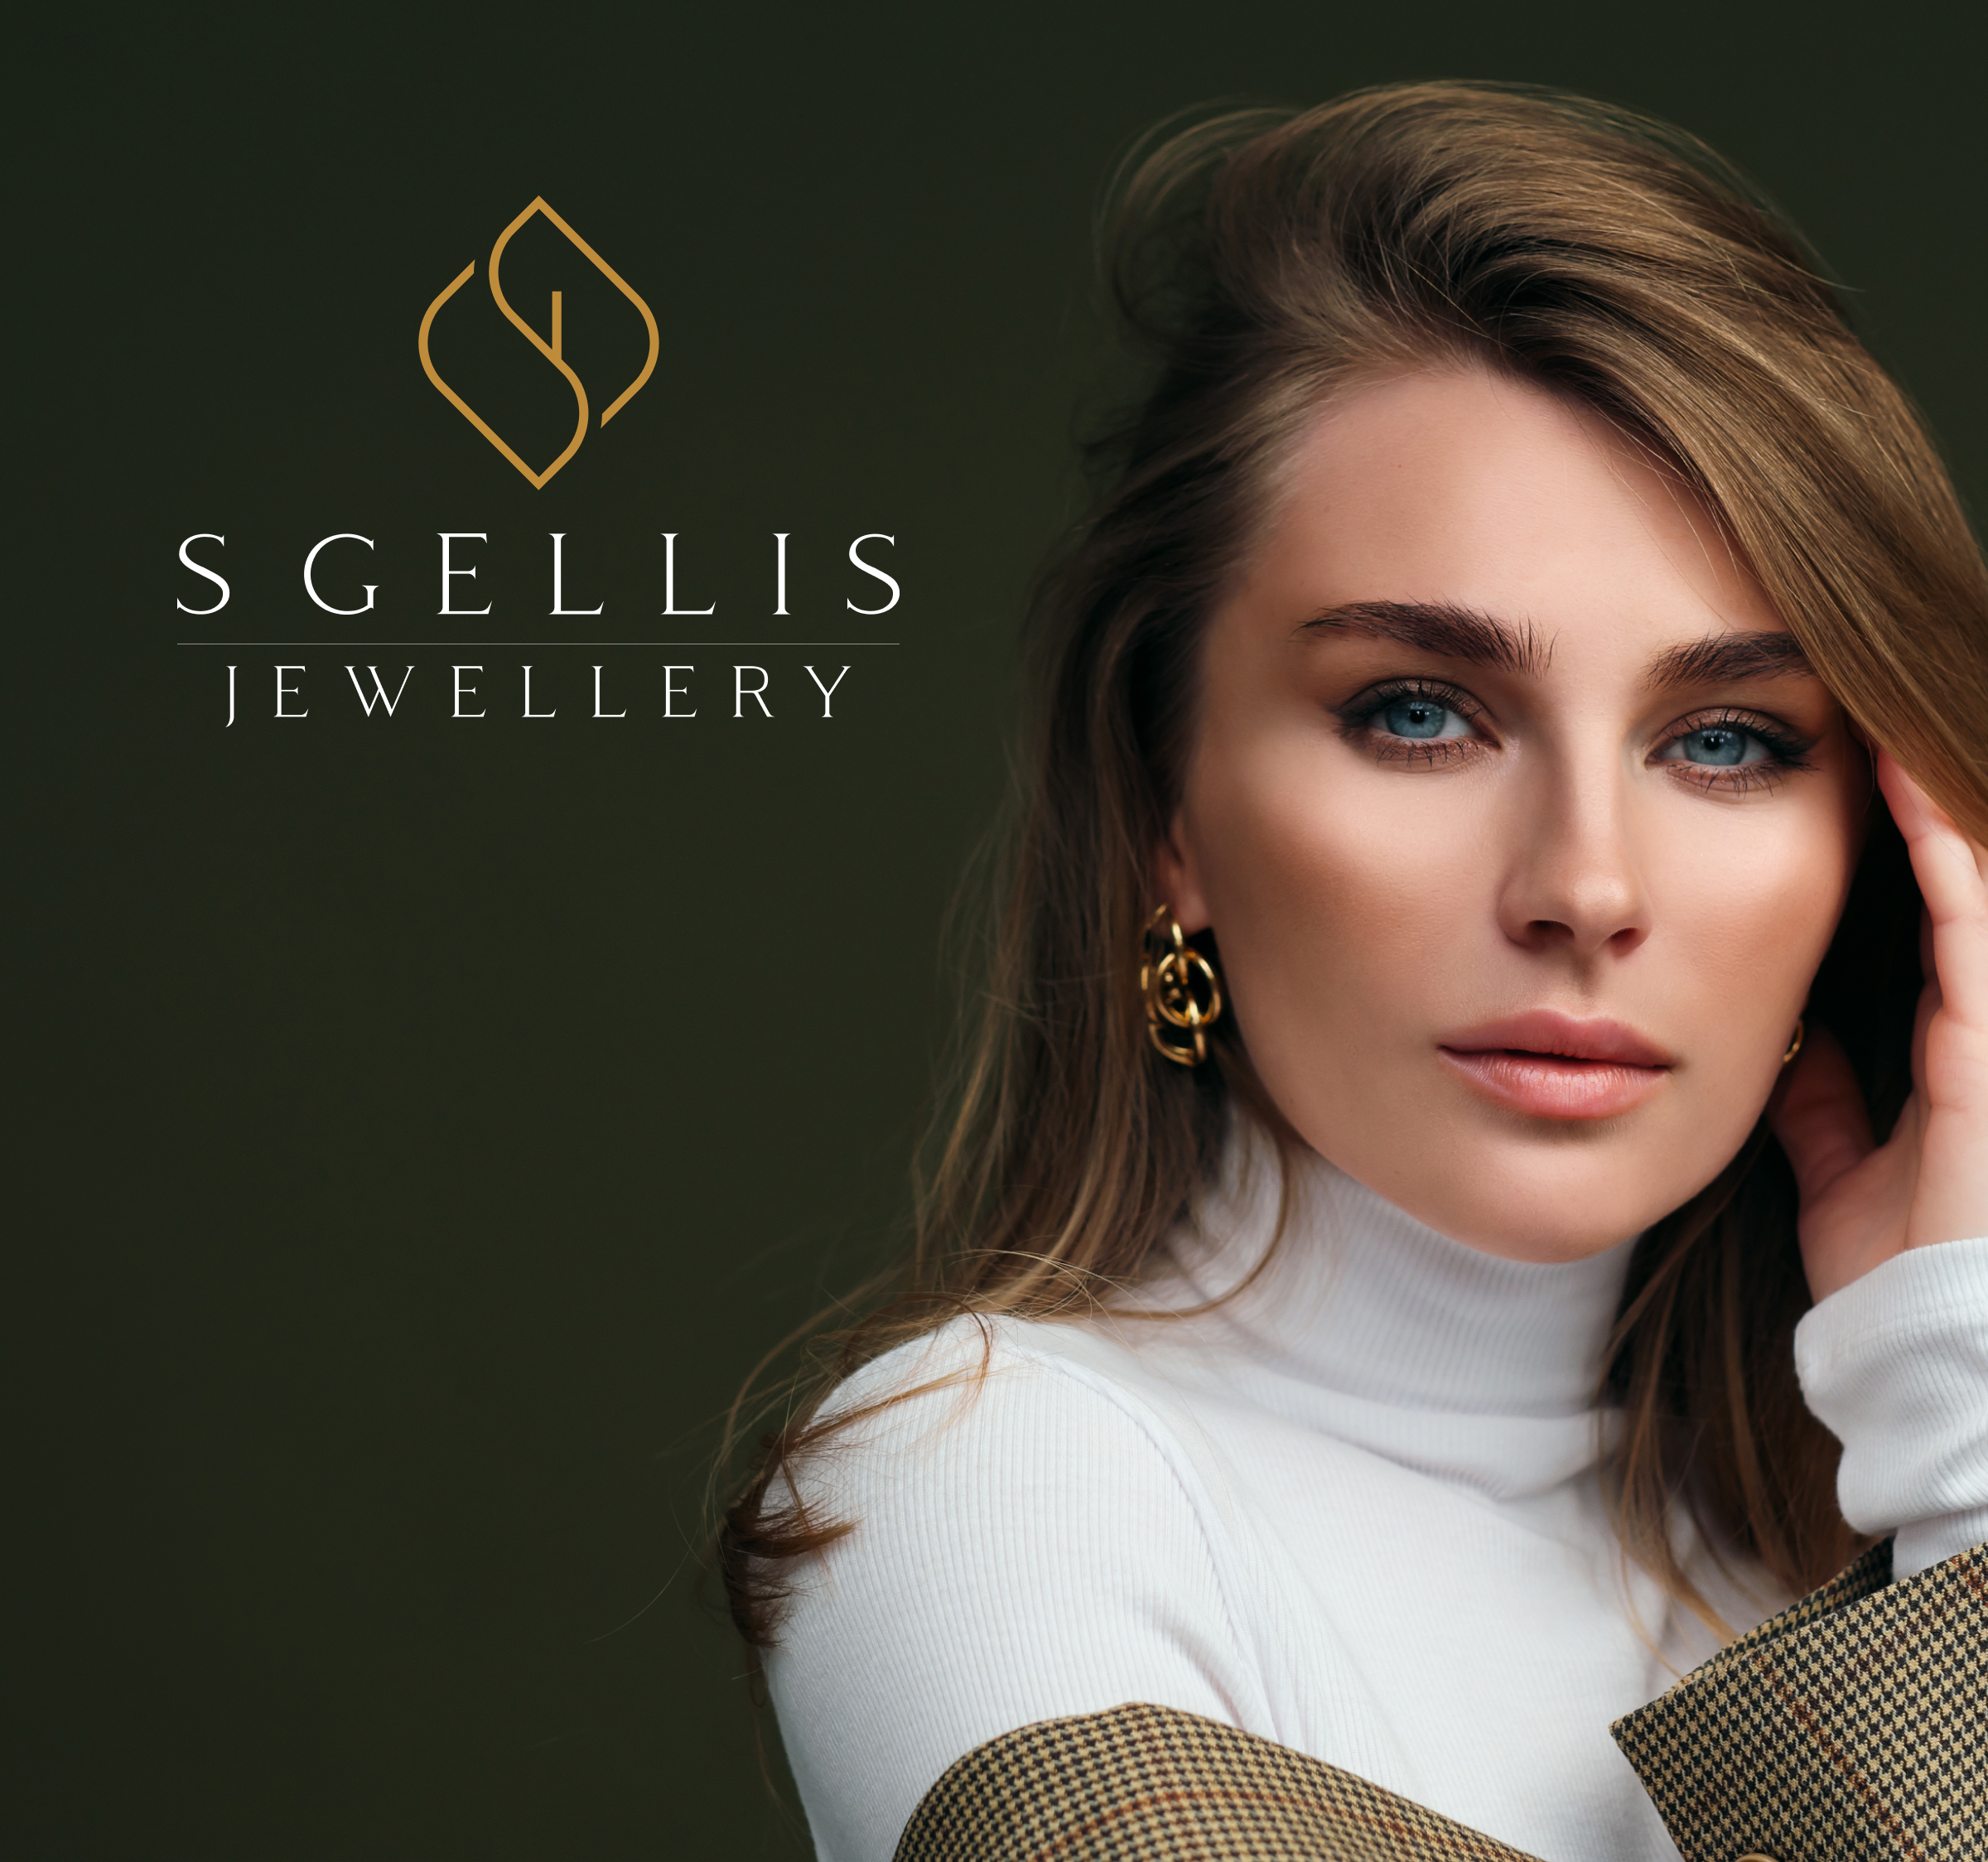 SGellis Jewellery